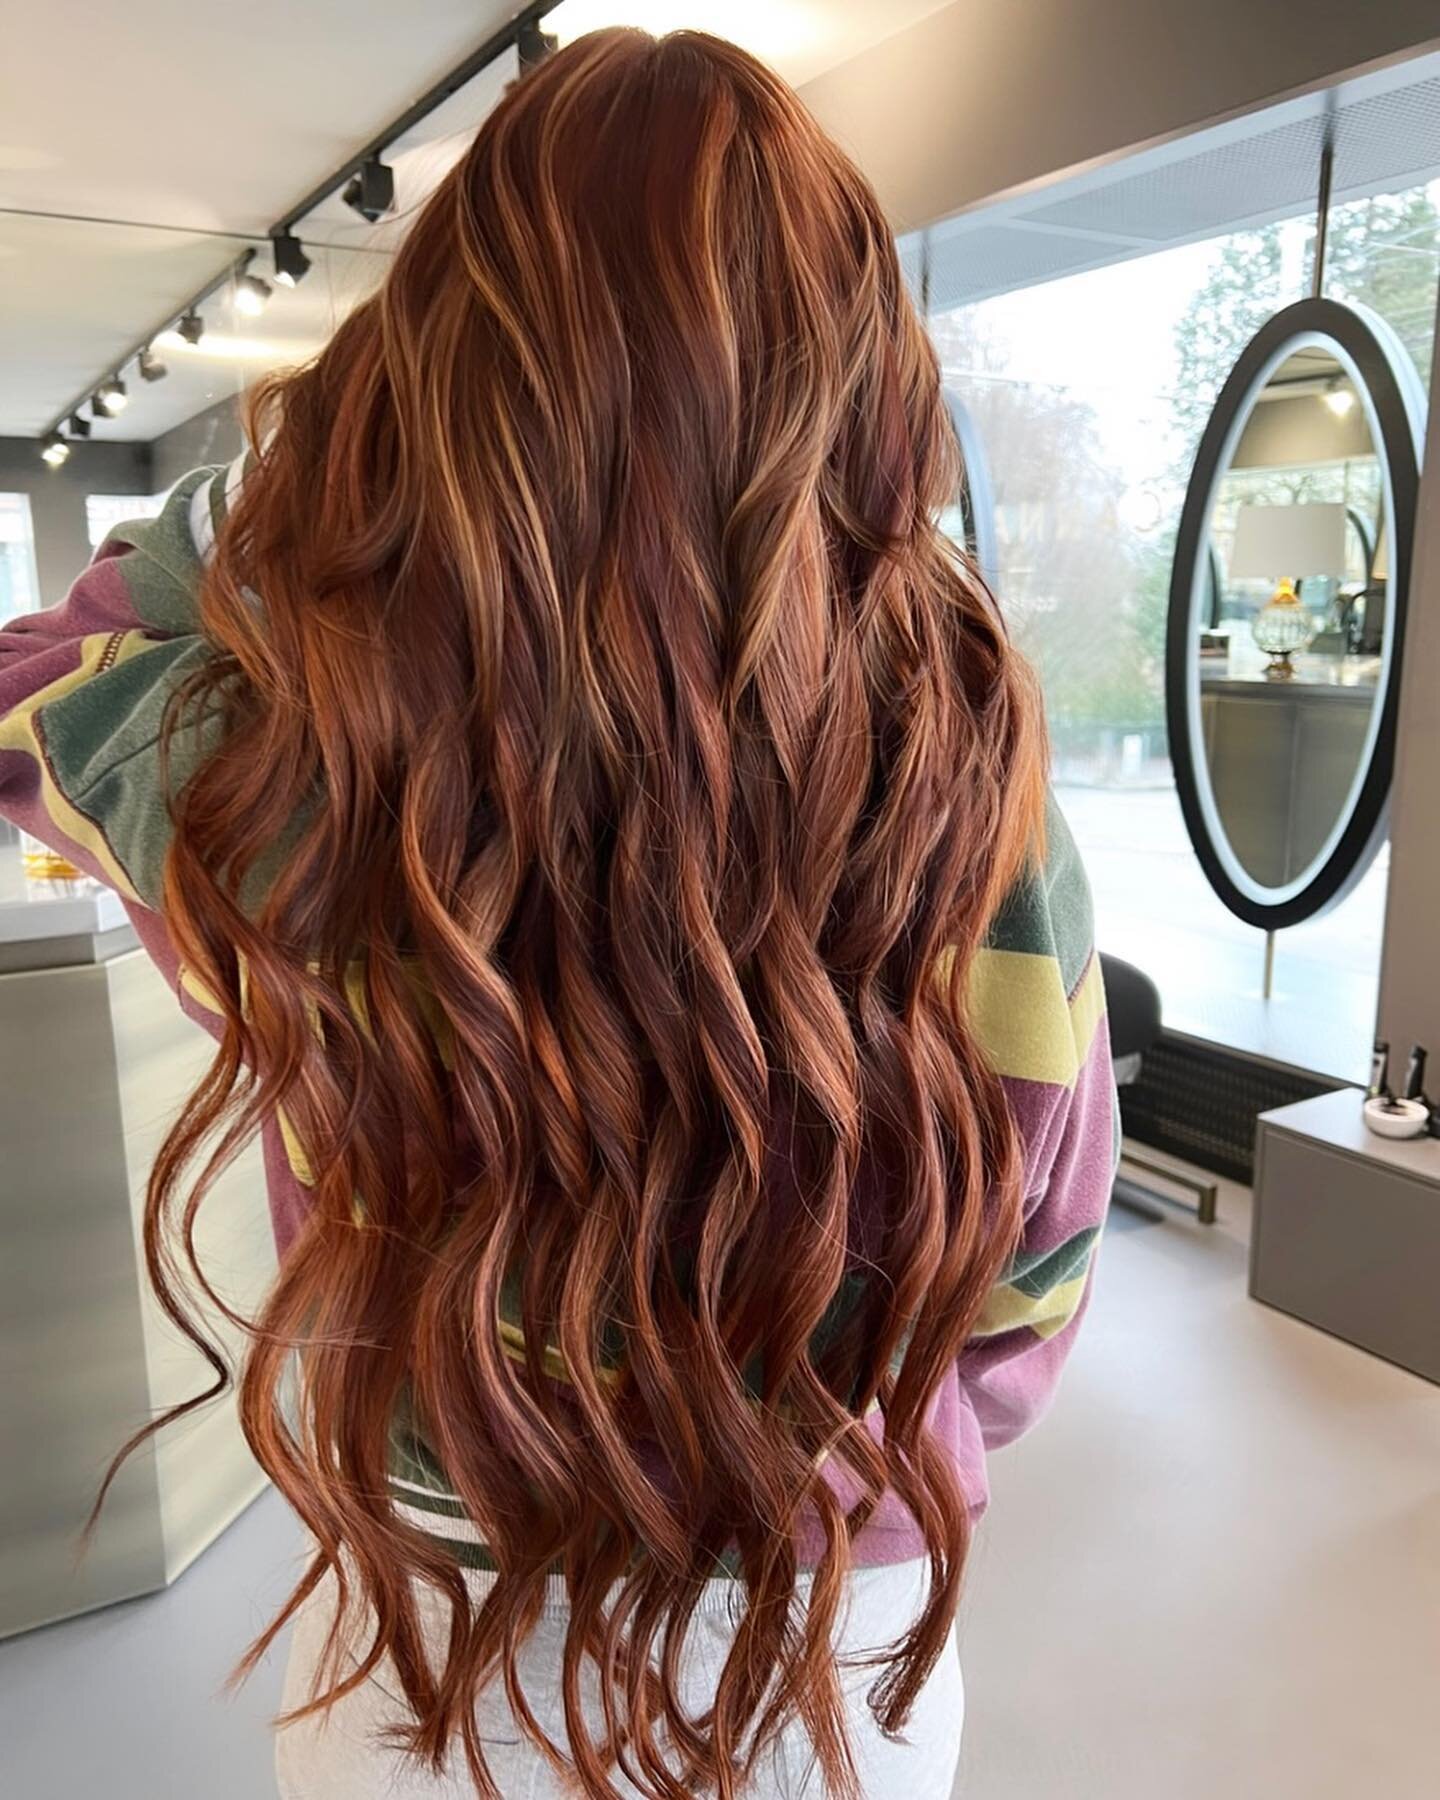 Big transformation ❤️&zwj;🔥 teamwork -by isami &amp; brigitte  #hairstyle #beforeandafter #hairtransformation #hairtrends #weftextensions #handtiedextensions #extensions #haircolorist #hairfashion #hairideas #hairgoals #balayage #redhair #copperbala